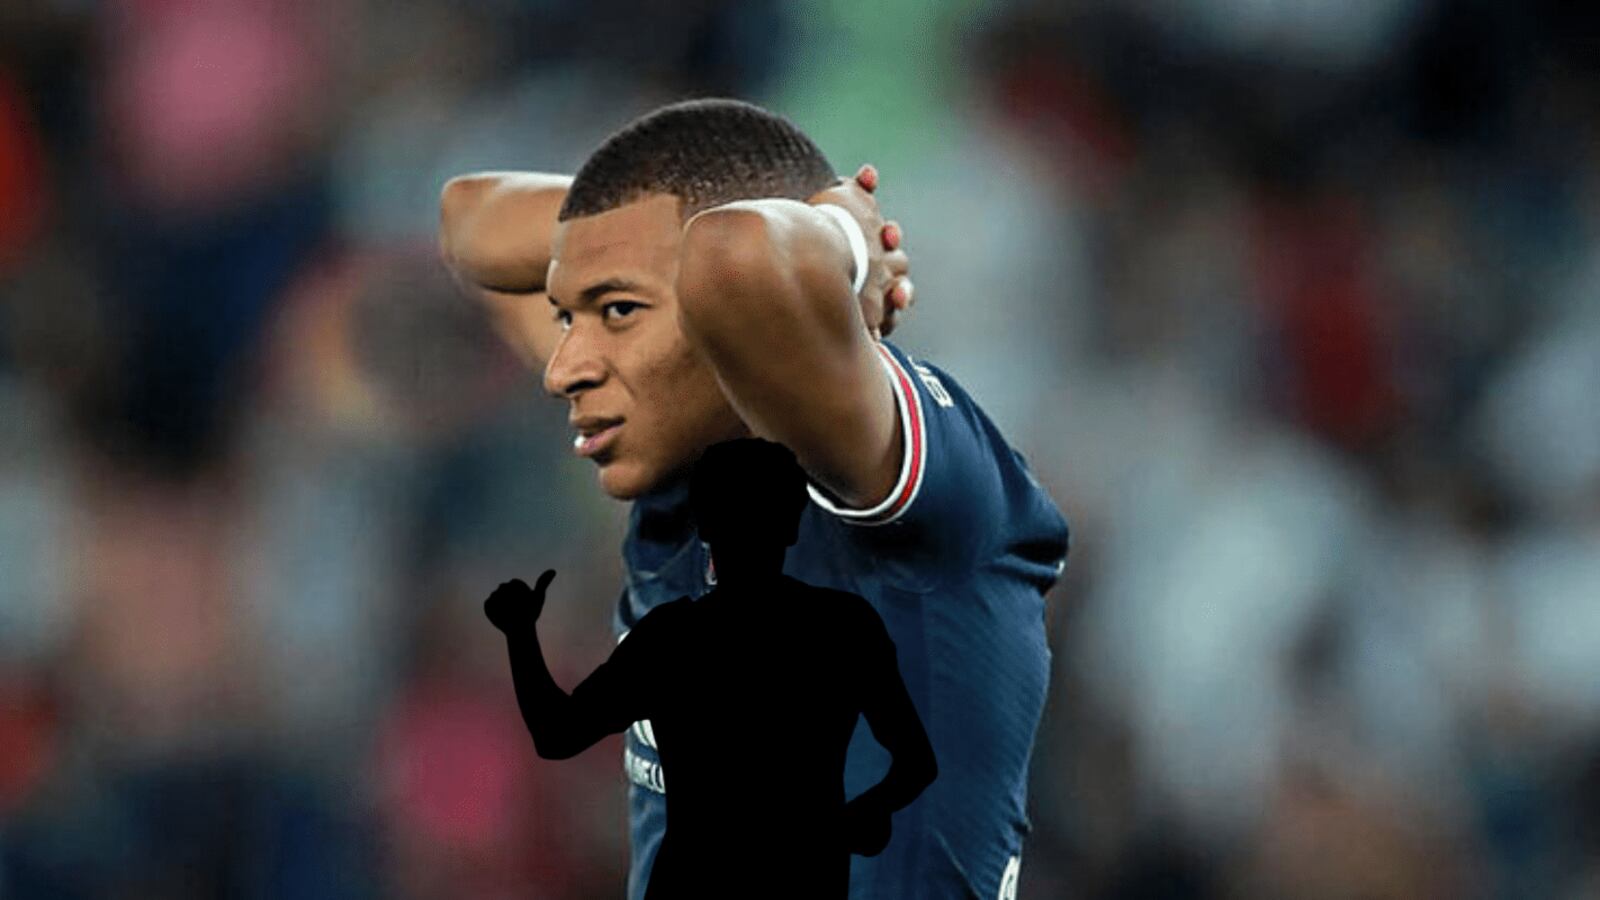 La dura derrota para Mbappé en el PSG, este sera el capitán del equipo parisino